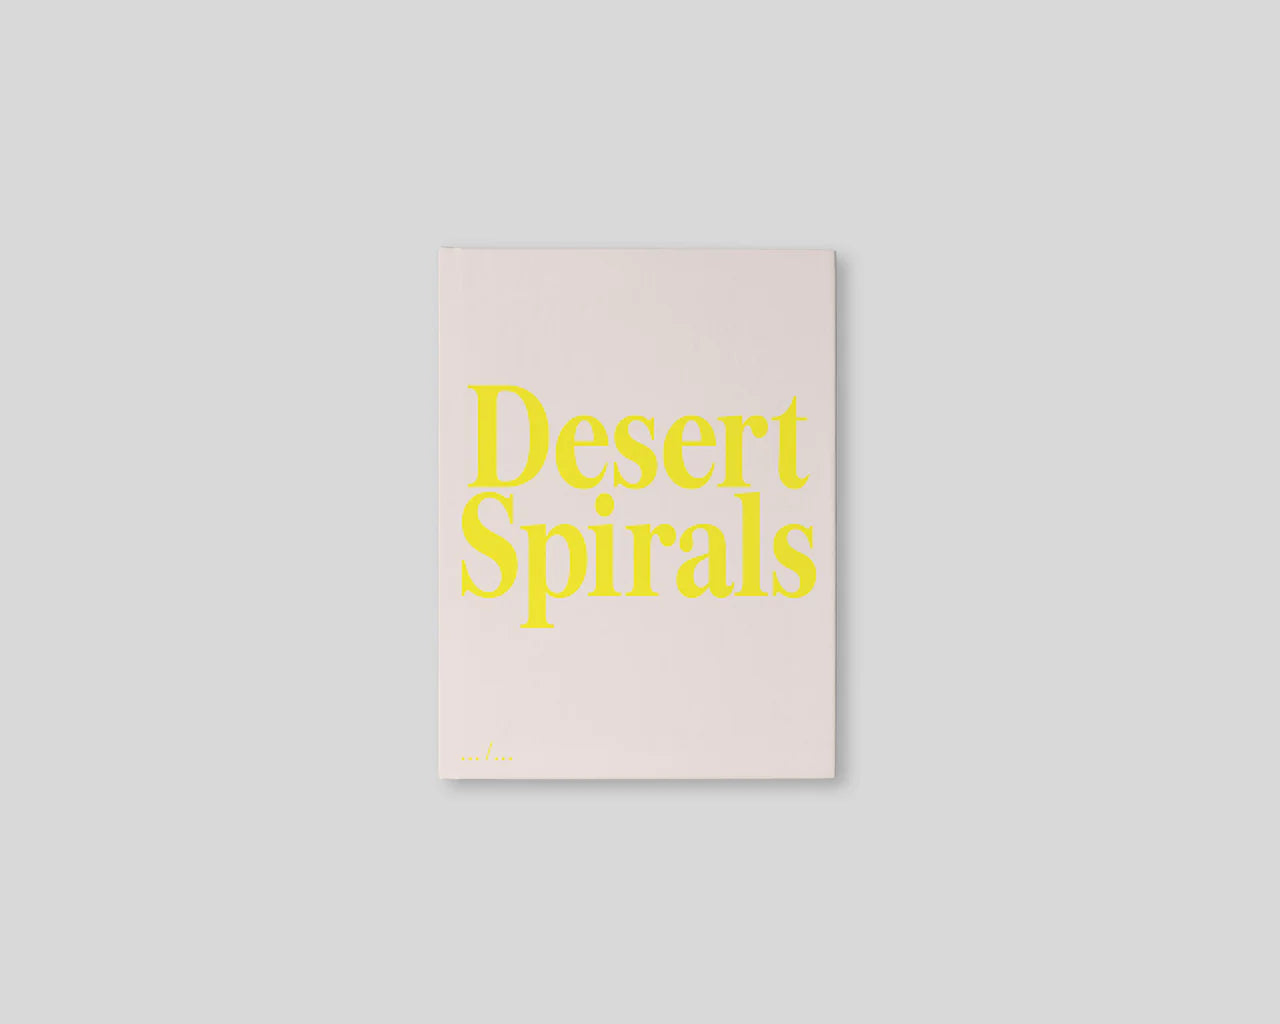 Desert sprirals by Sybren Vanoverberghe